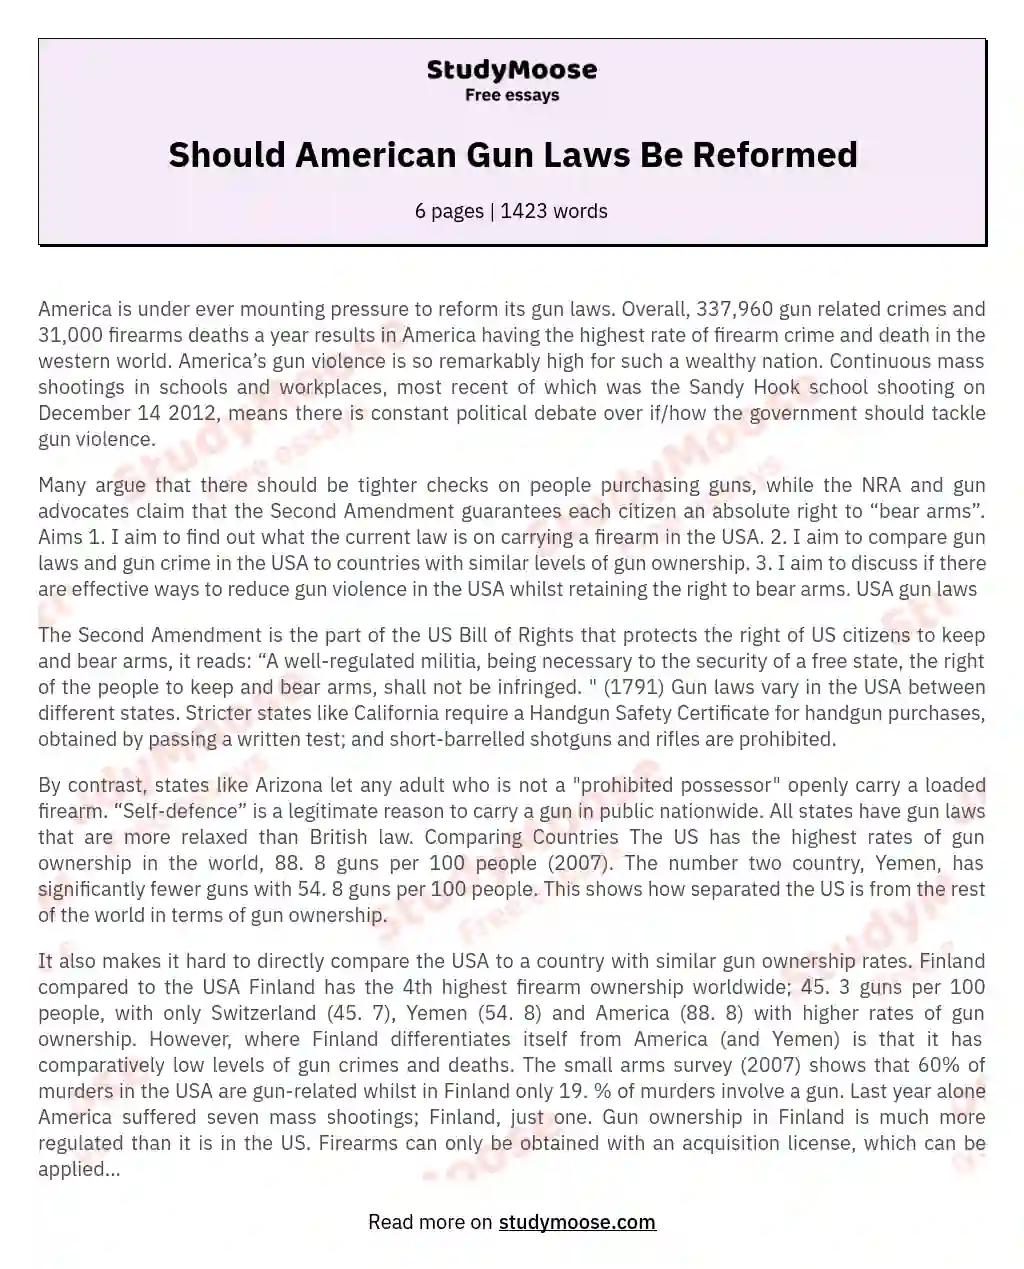 Should American Gun Laws Be Reformed